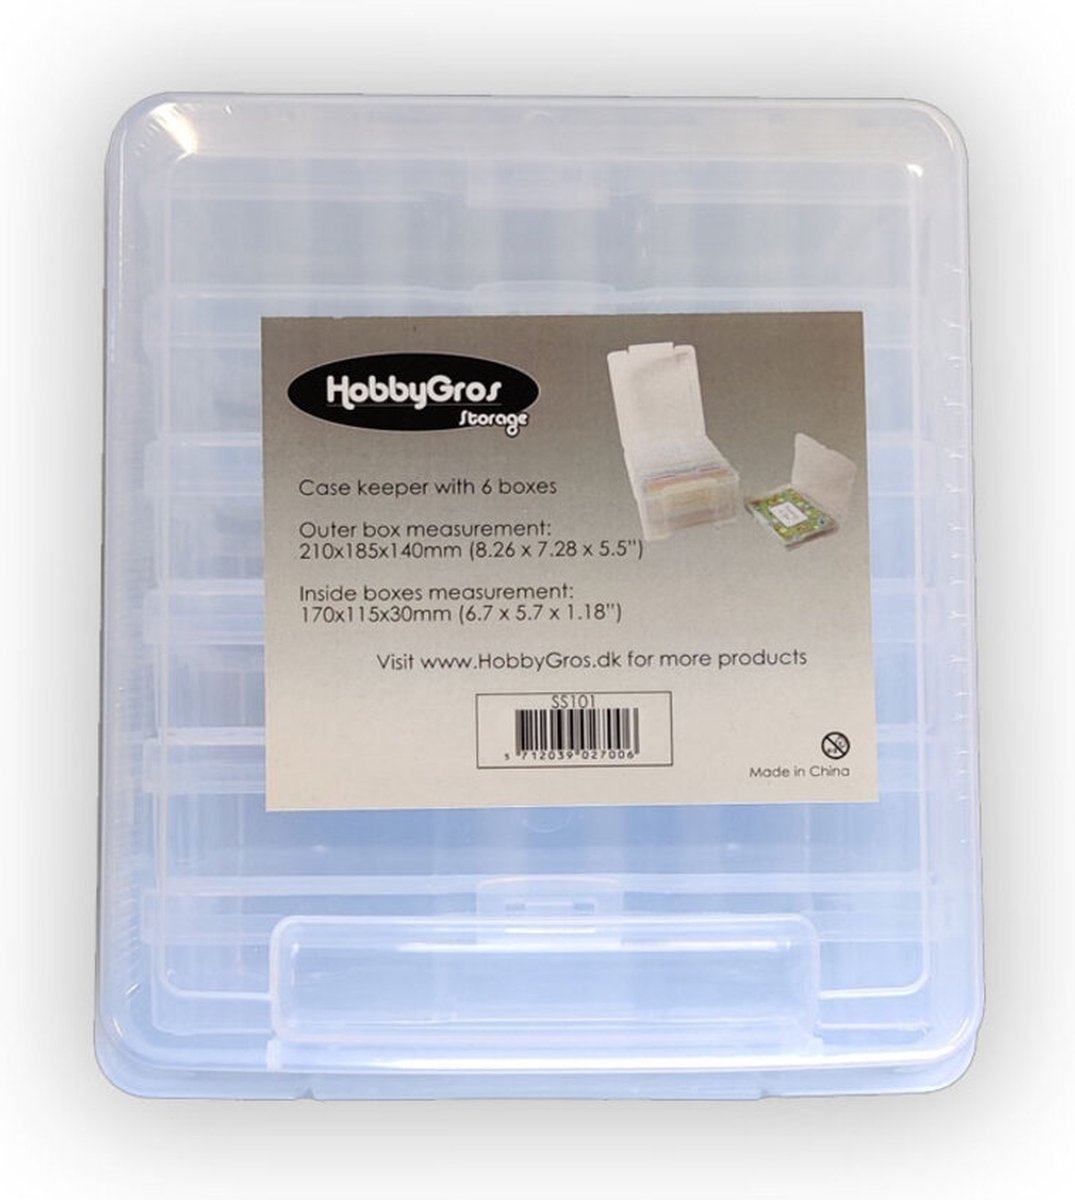 HobbyGros Storage - Plastic Storage Box Case Keeper w/ 6 Boxes (SS101)